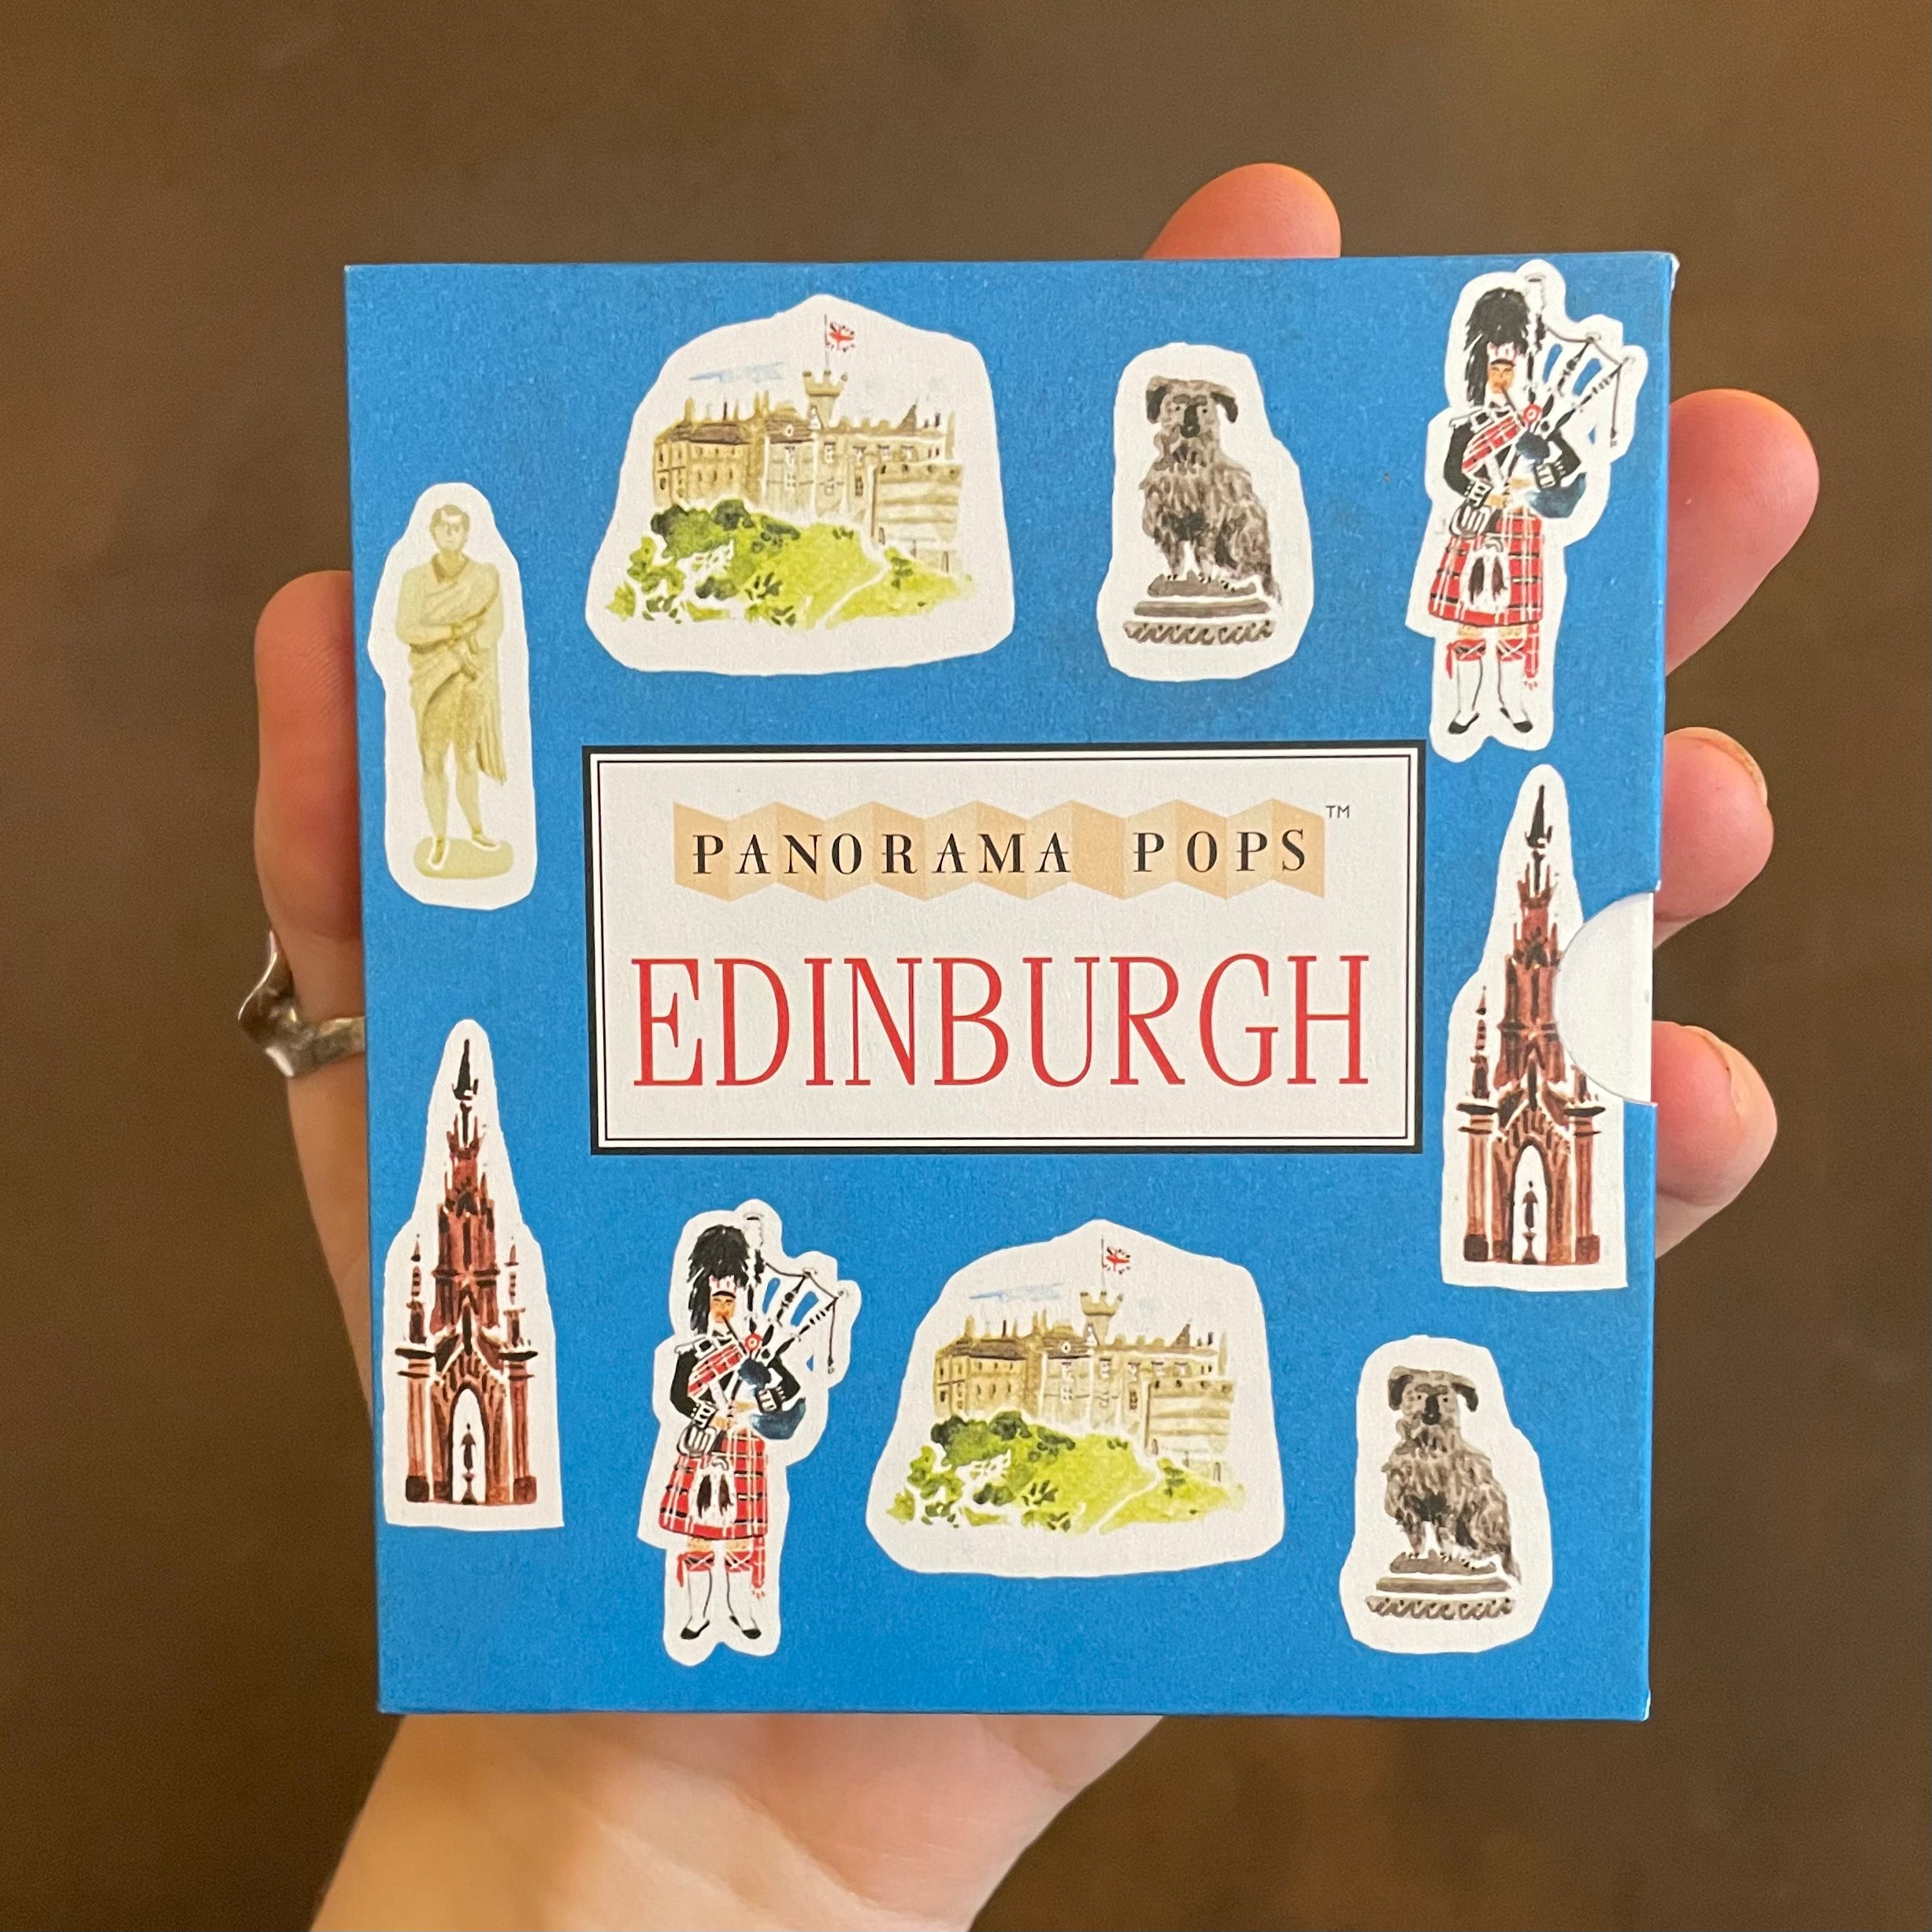 Edinburgh: A Three-Dimensional Expanding City Skyline